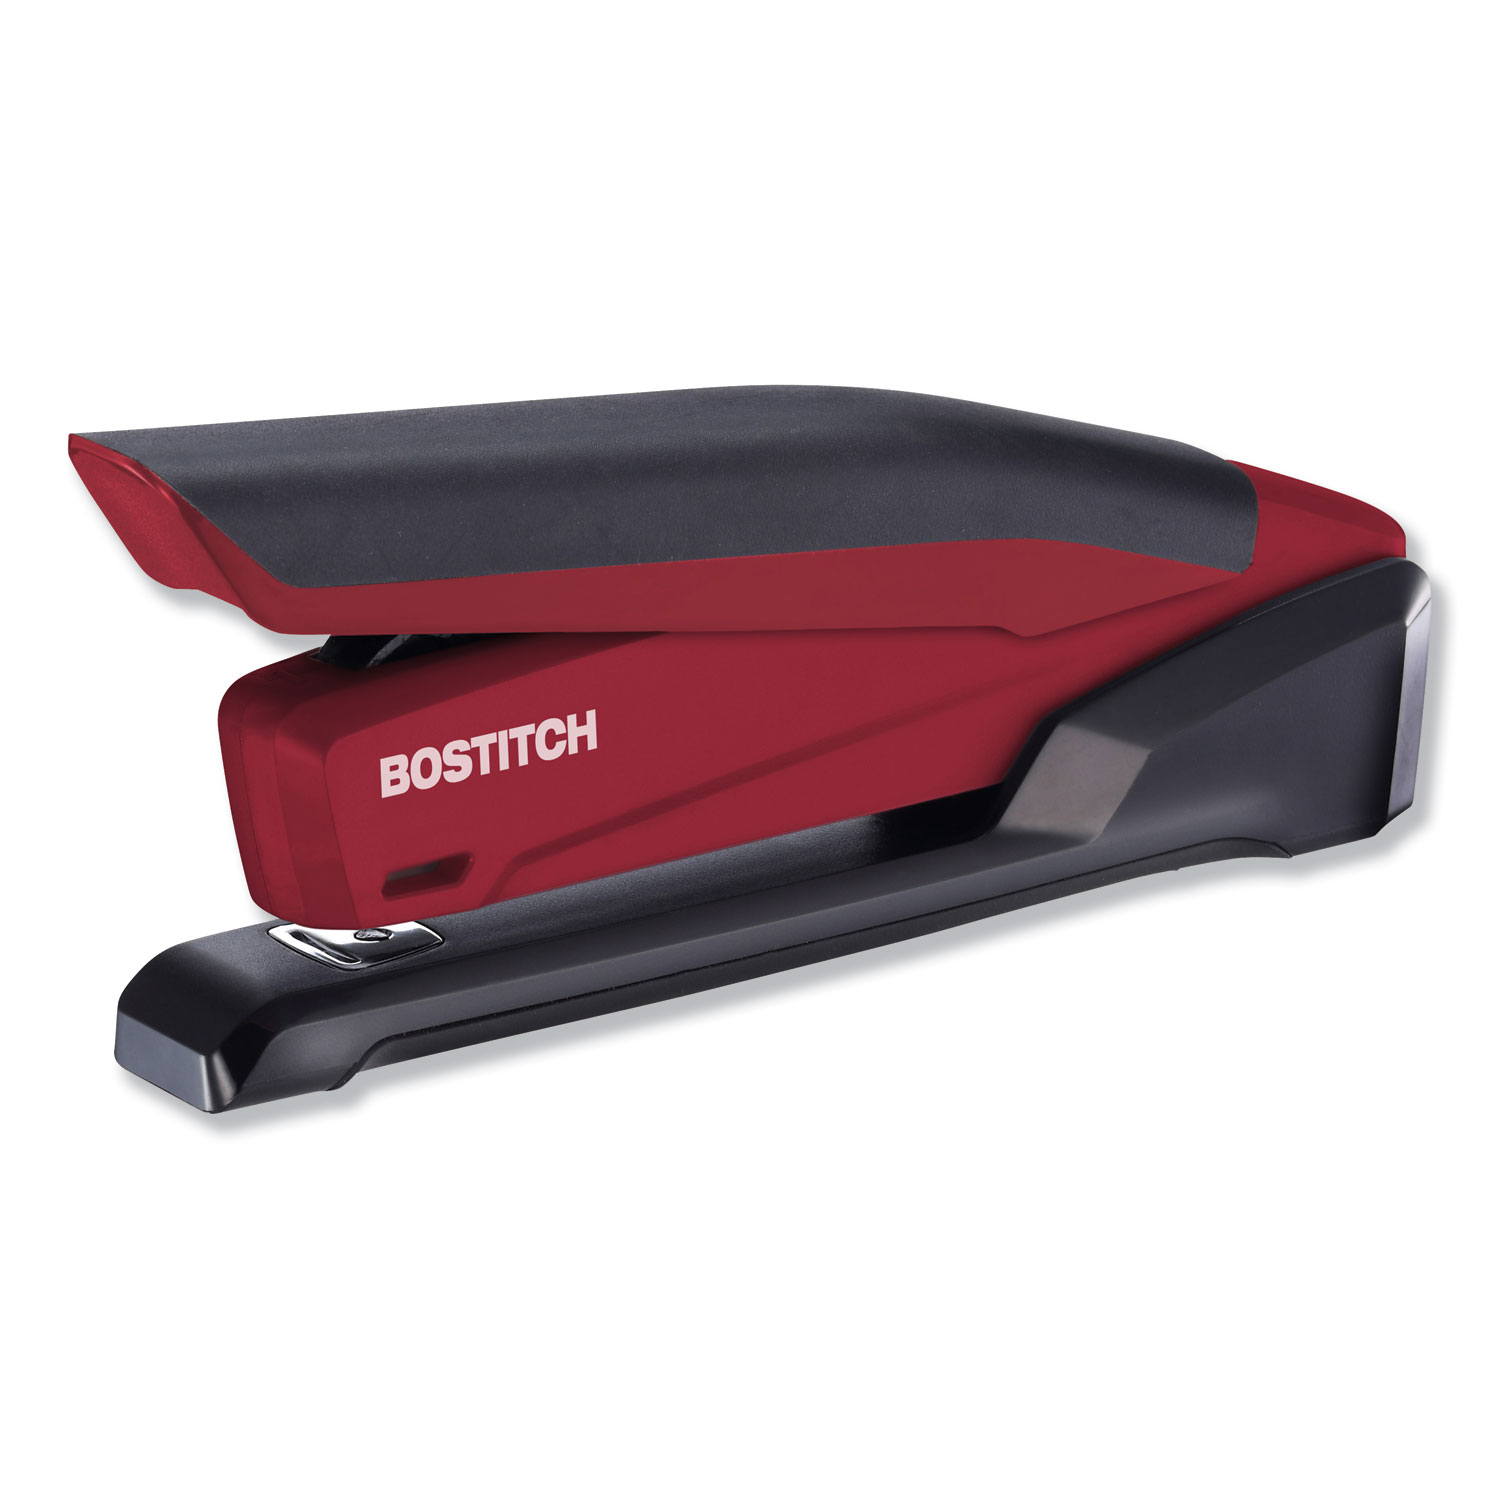  Bostitch 1124 InPower Spring-Powered Desktop Stapler, 20-Sheet Capacity, Red (ACI1124) 